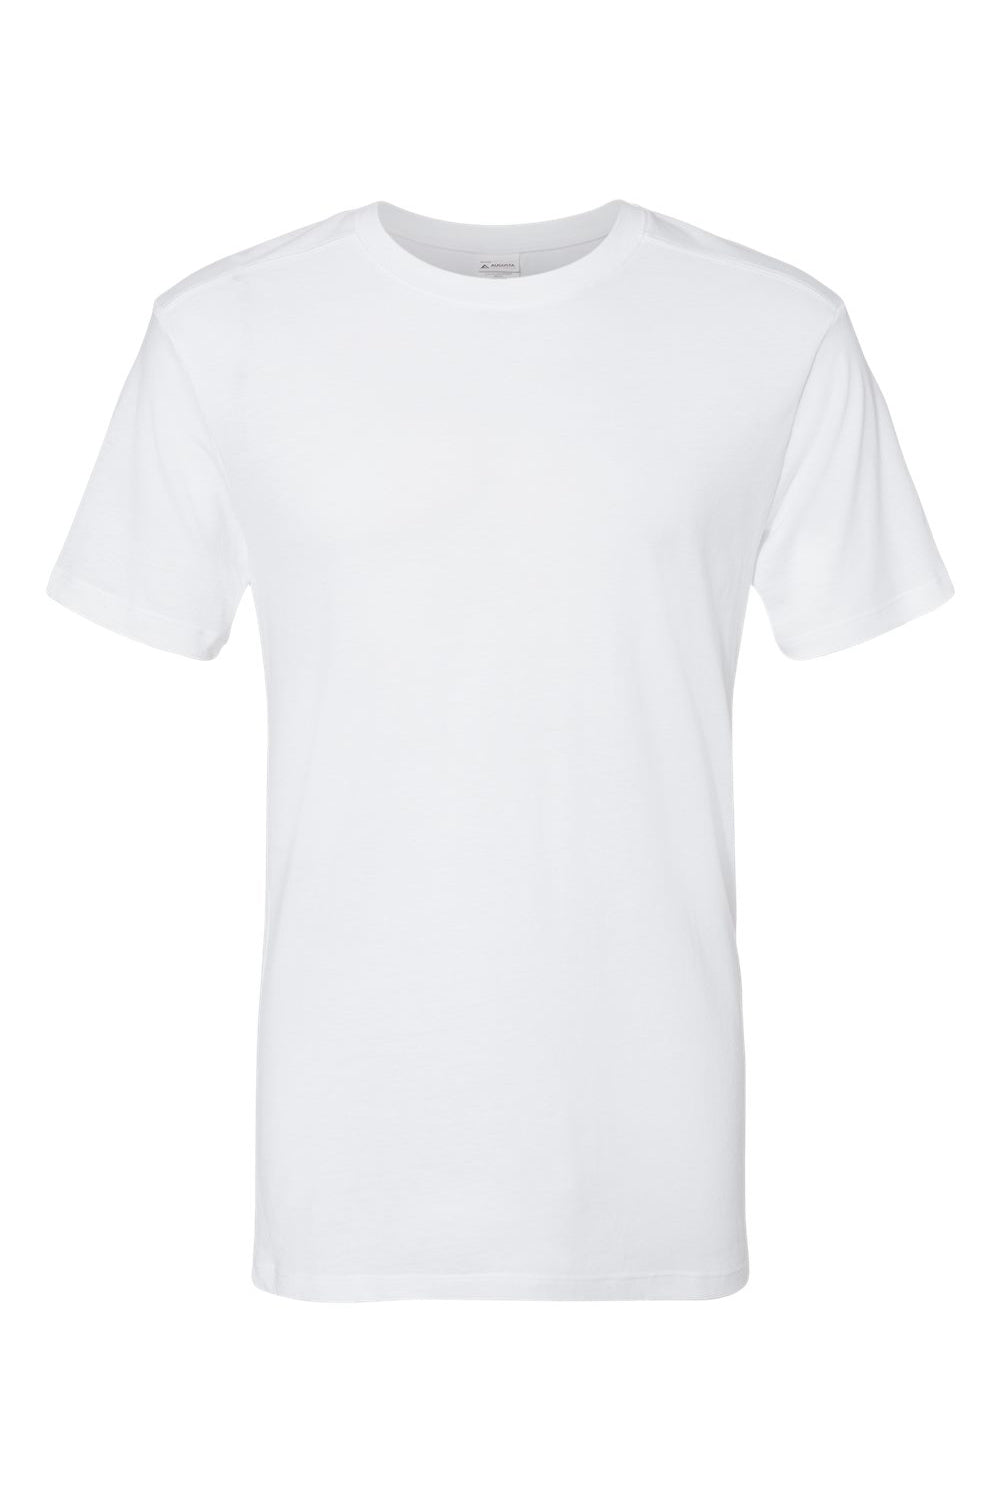 Augusta Sportswear 3065 Mens Short Sleeve Crewneck T-Shirt White Flat Front